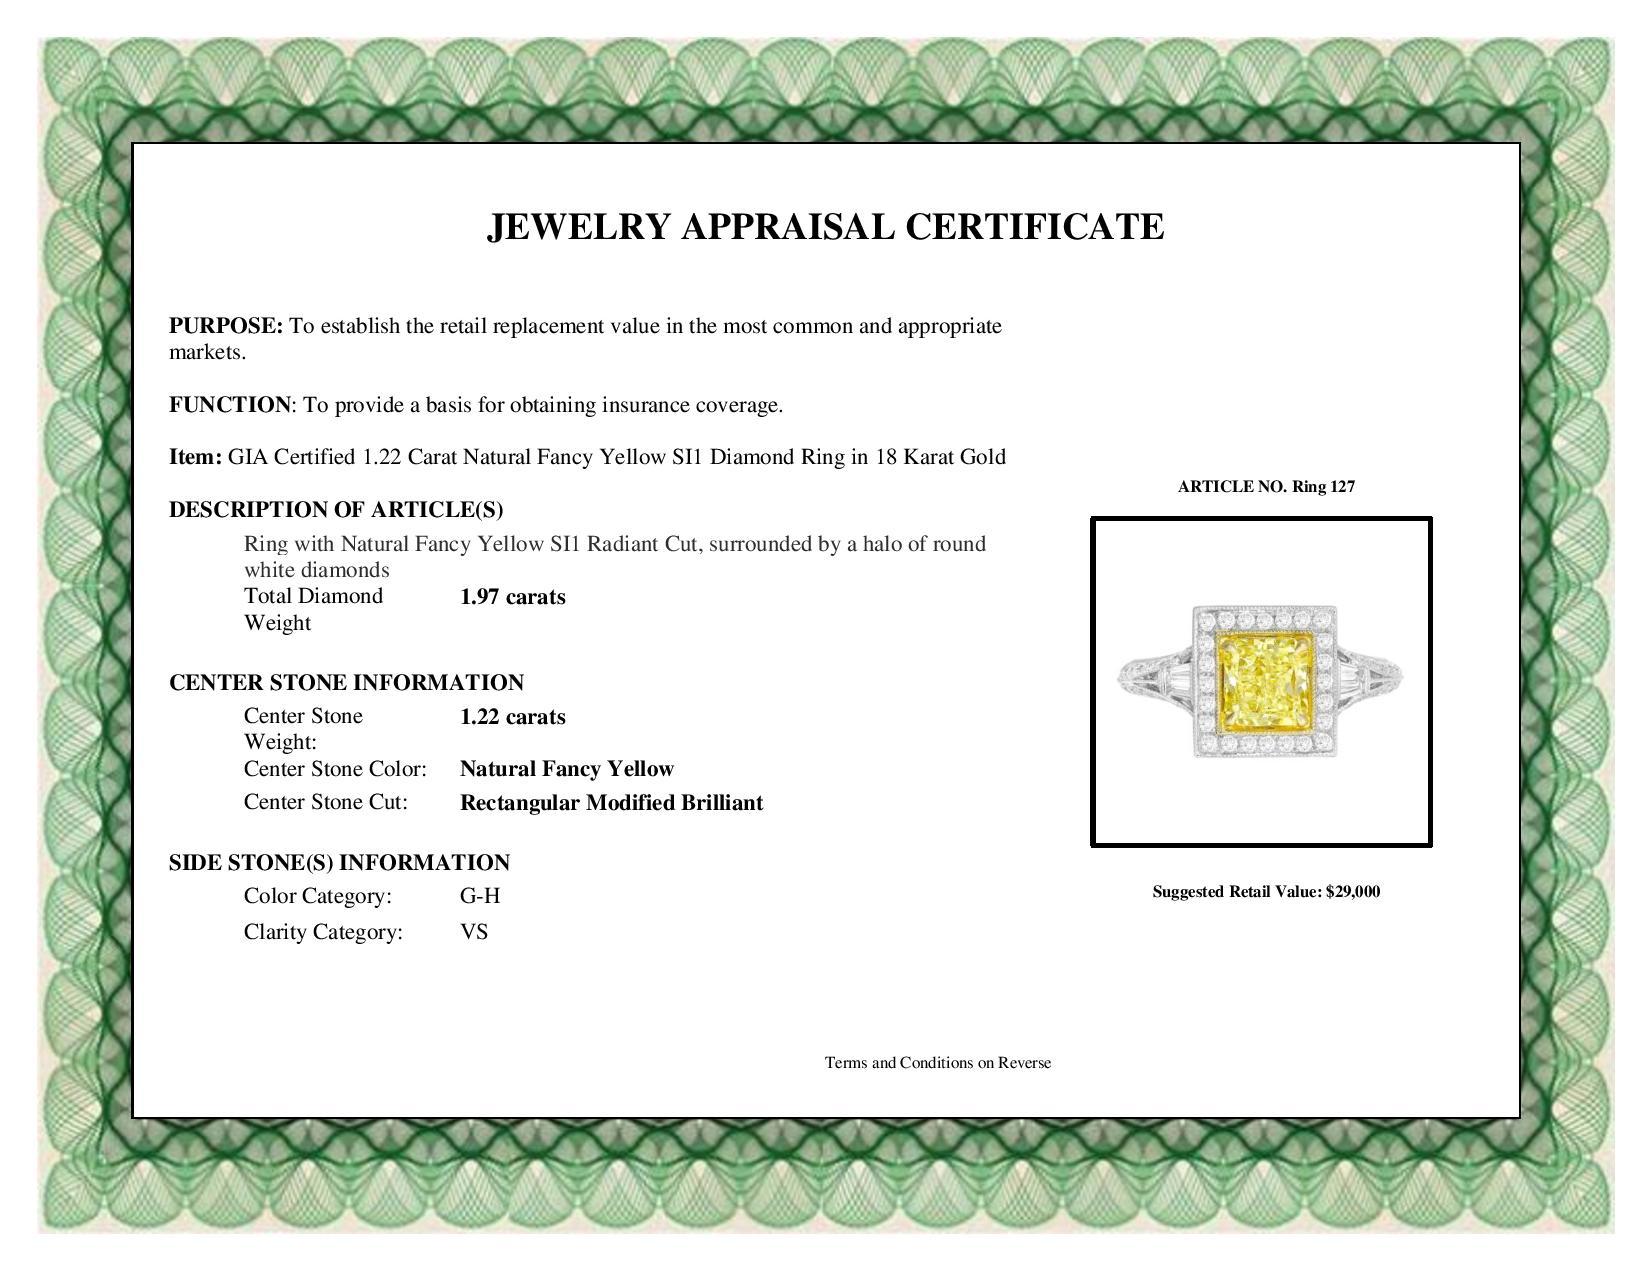 DiamondTown GIA Certified 1.22 Carat Natural Fancy Yellow SI1 Diamond Ring 2